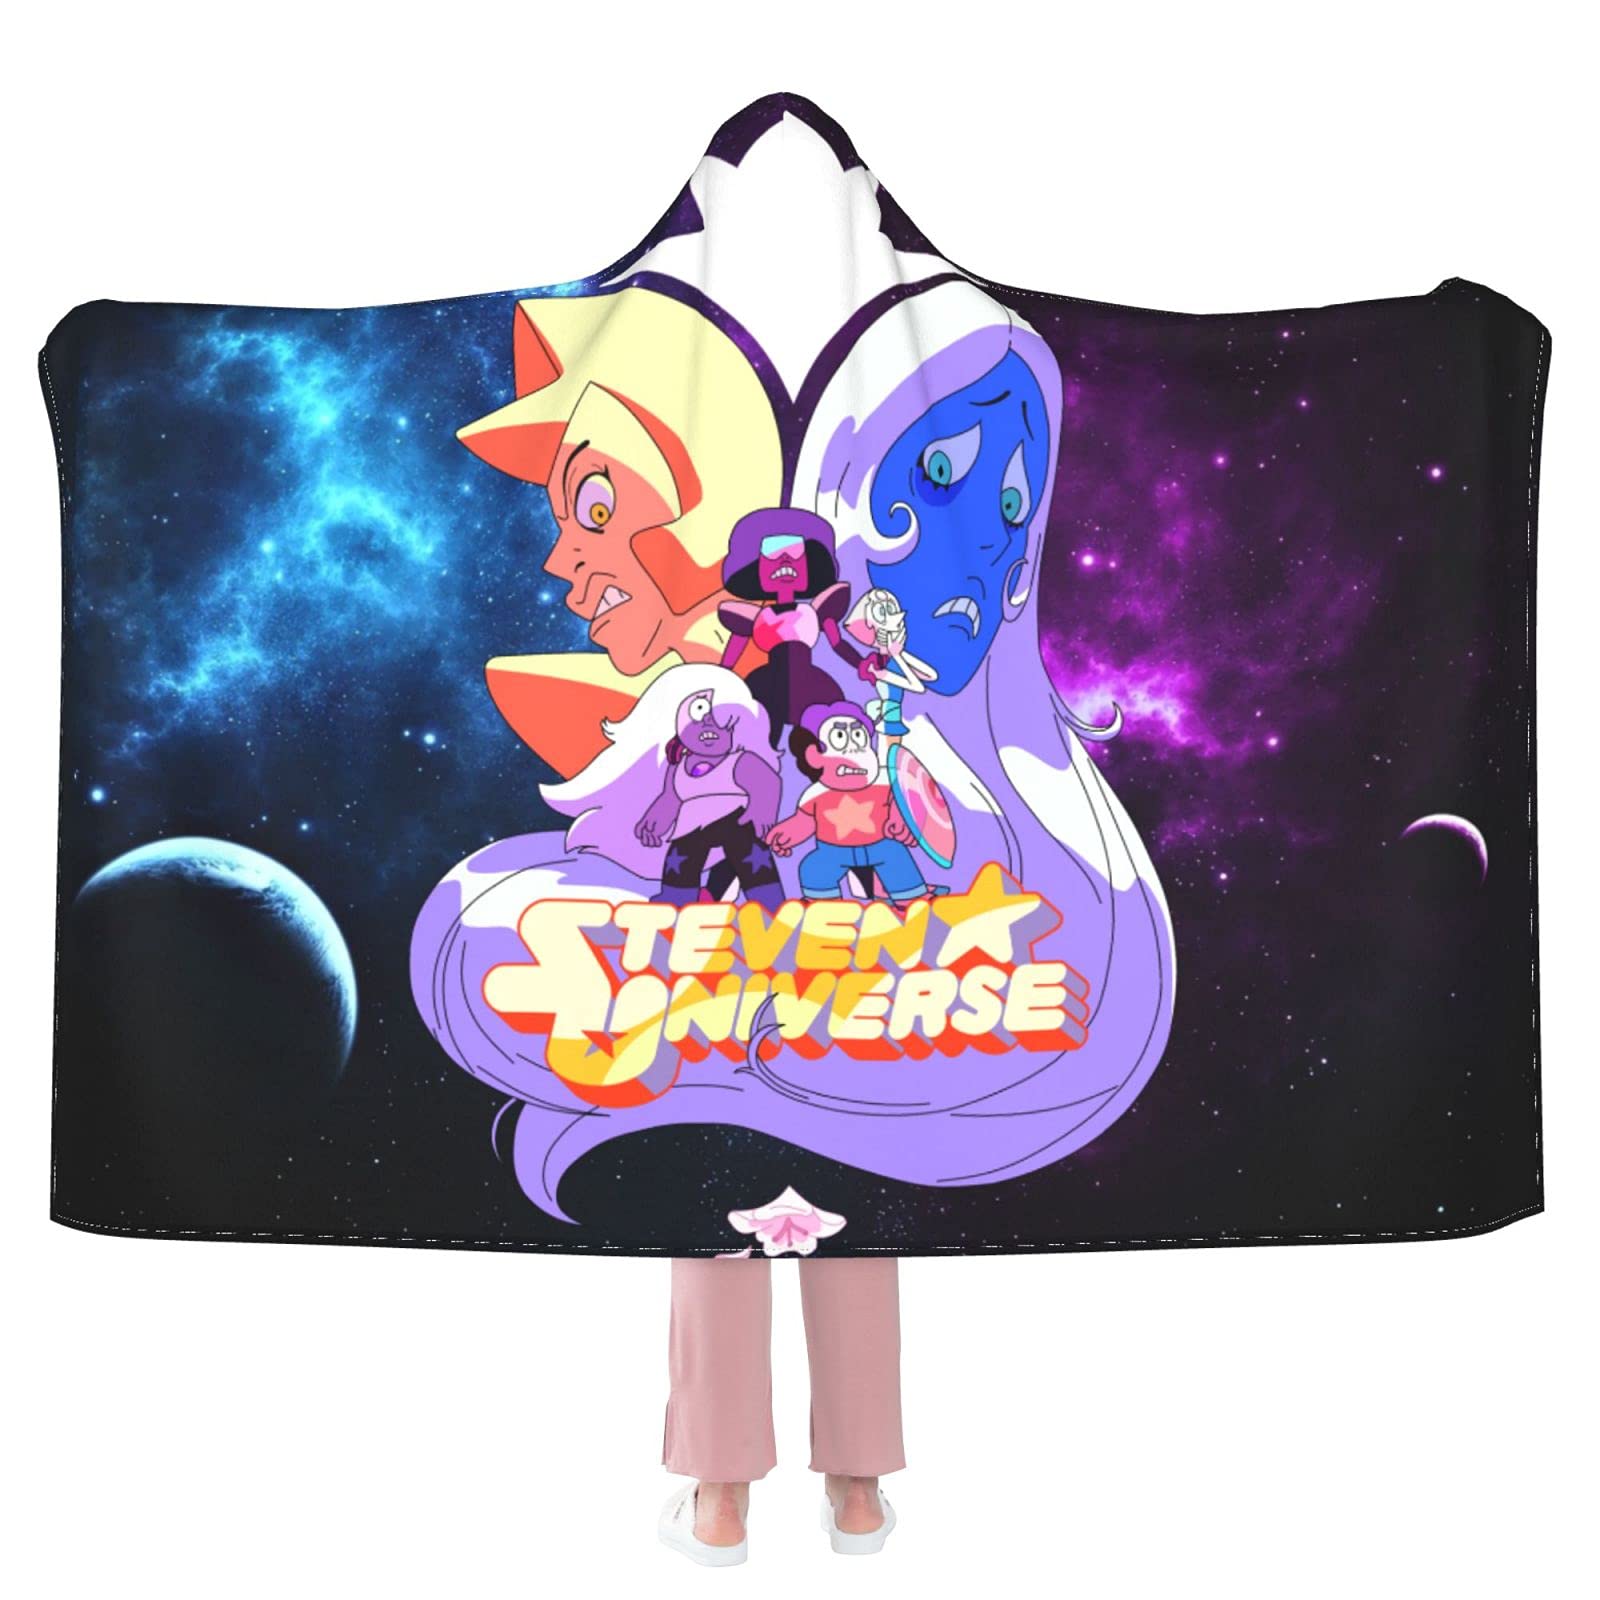 Anime Steven Universe Hooded Blanket 3D Print Super Soft Fleece Throw Blanket for Bedroom Livingroom Air Conditioning Blanket 80"x60" Inch